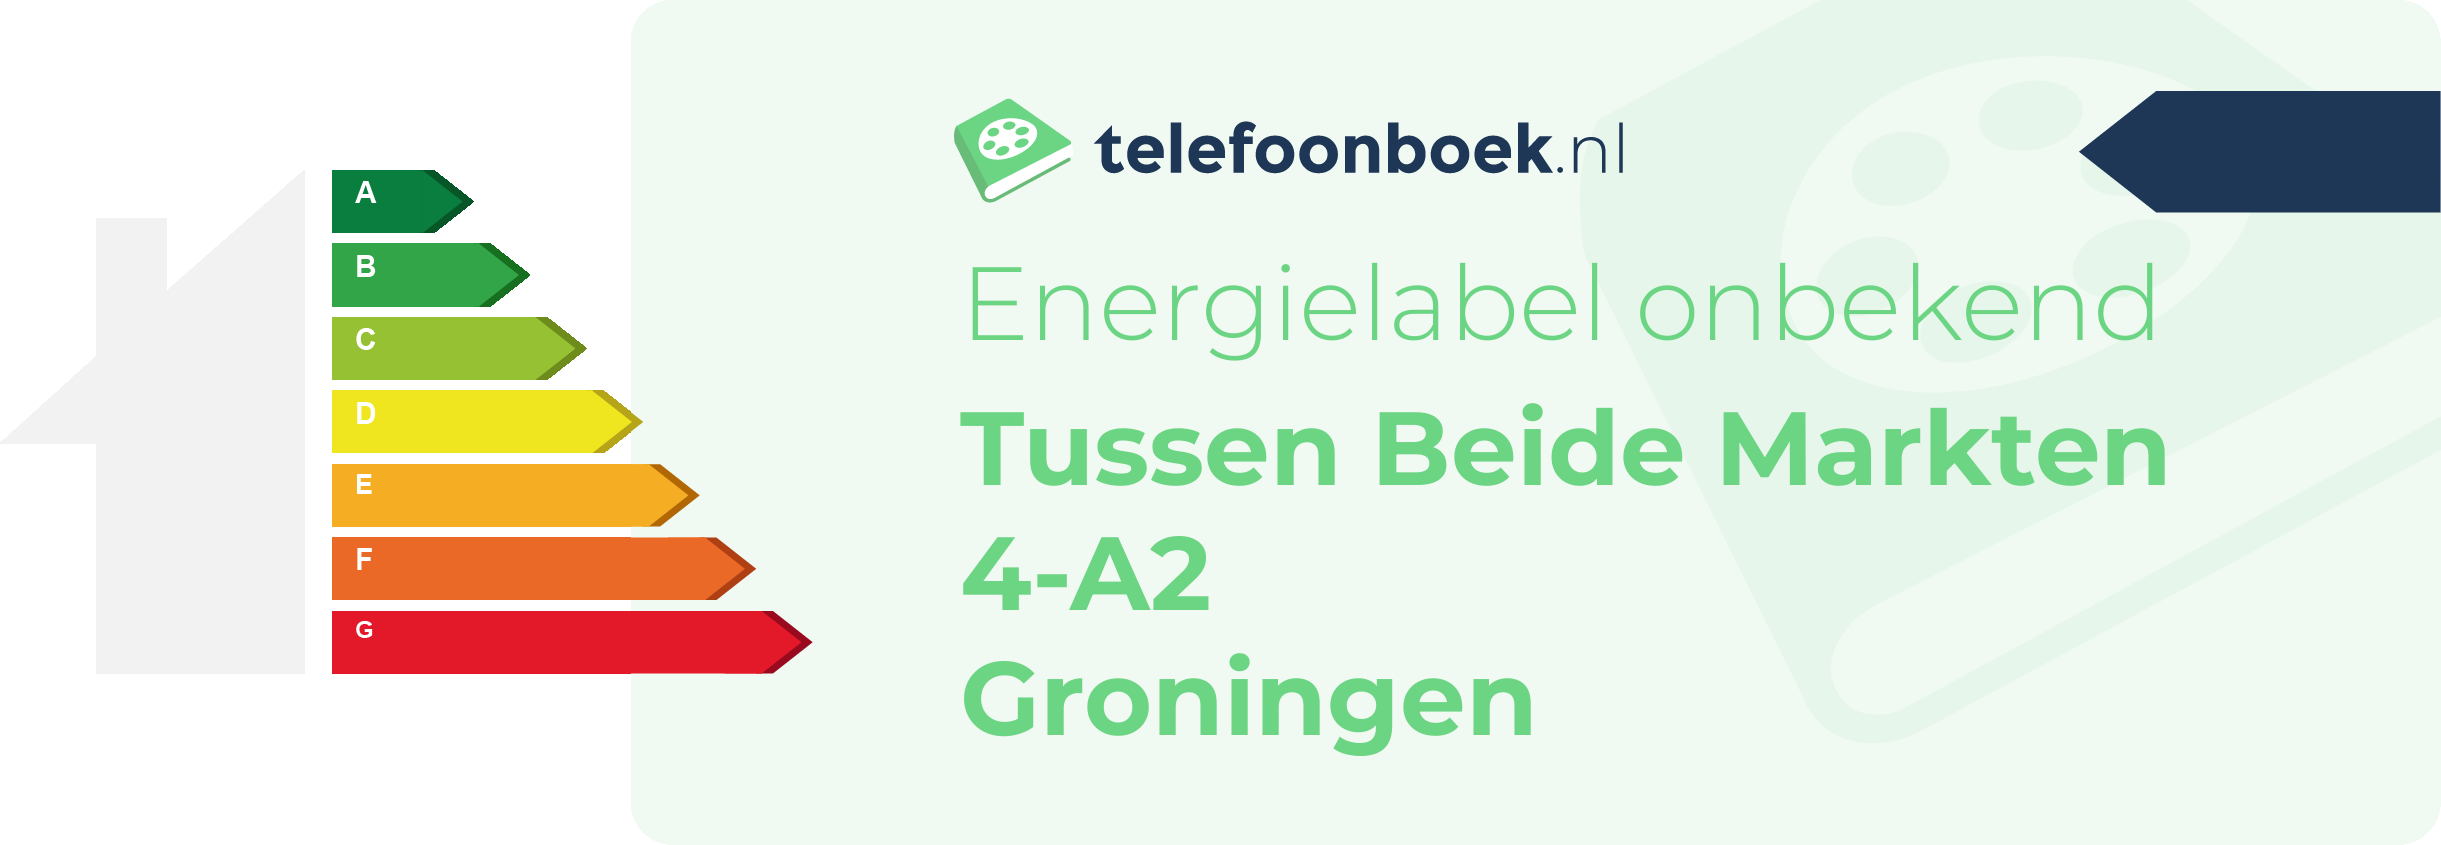 Energielabel Tussen Beide Markten 4-A2 Groningen